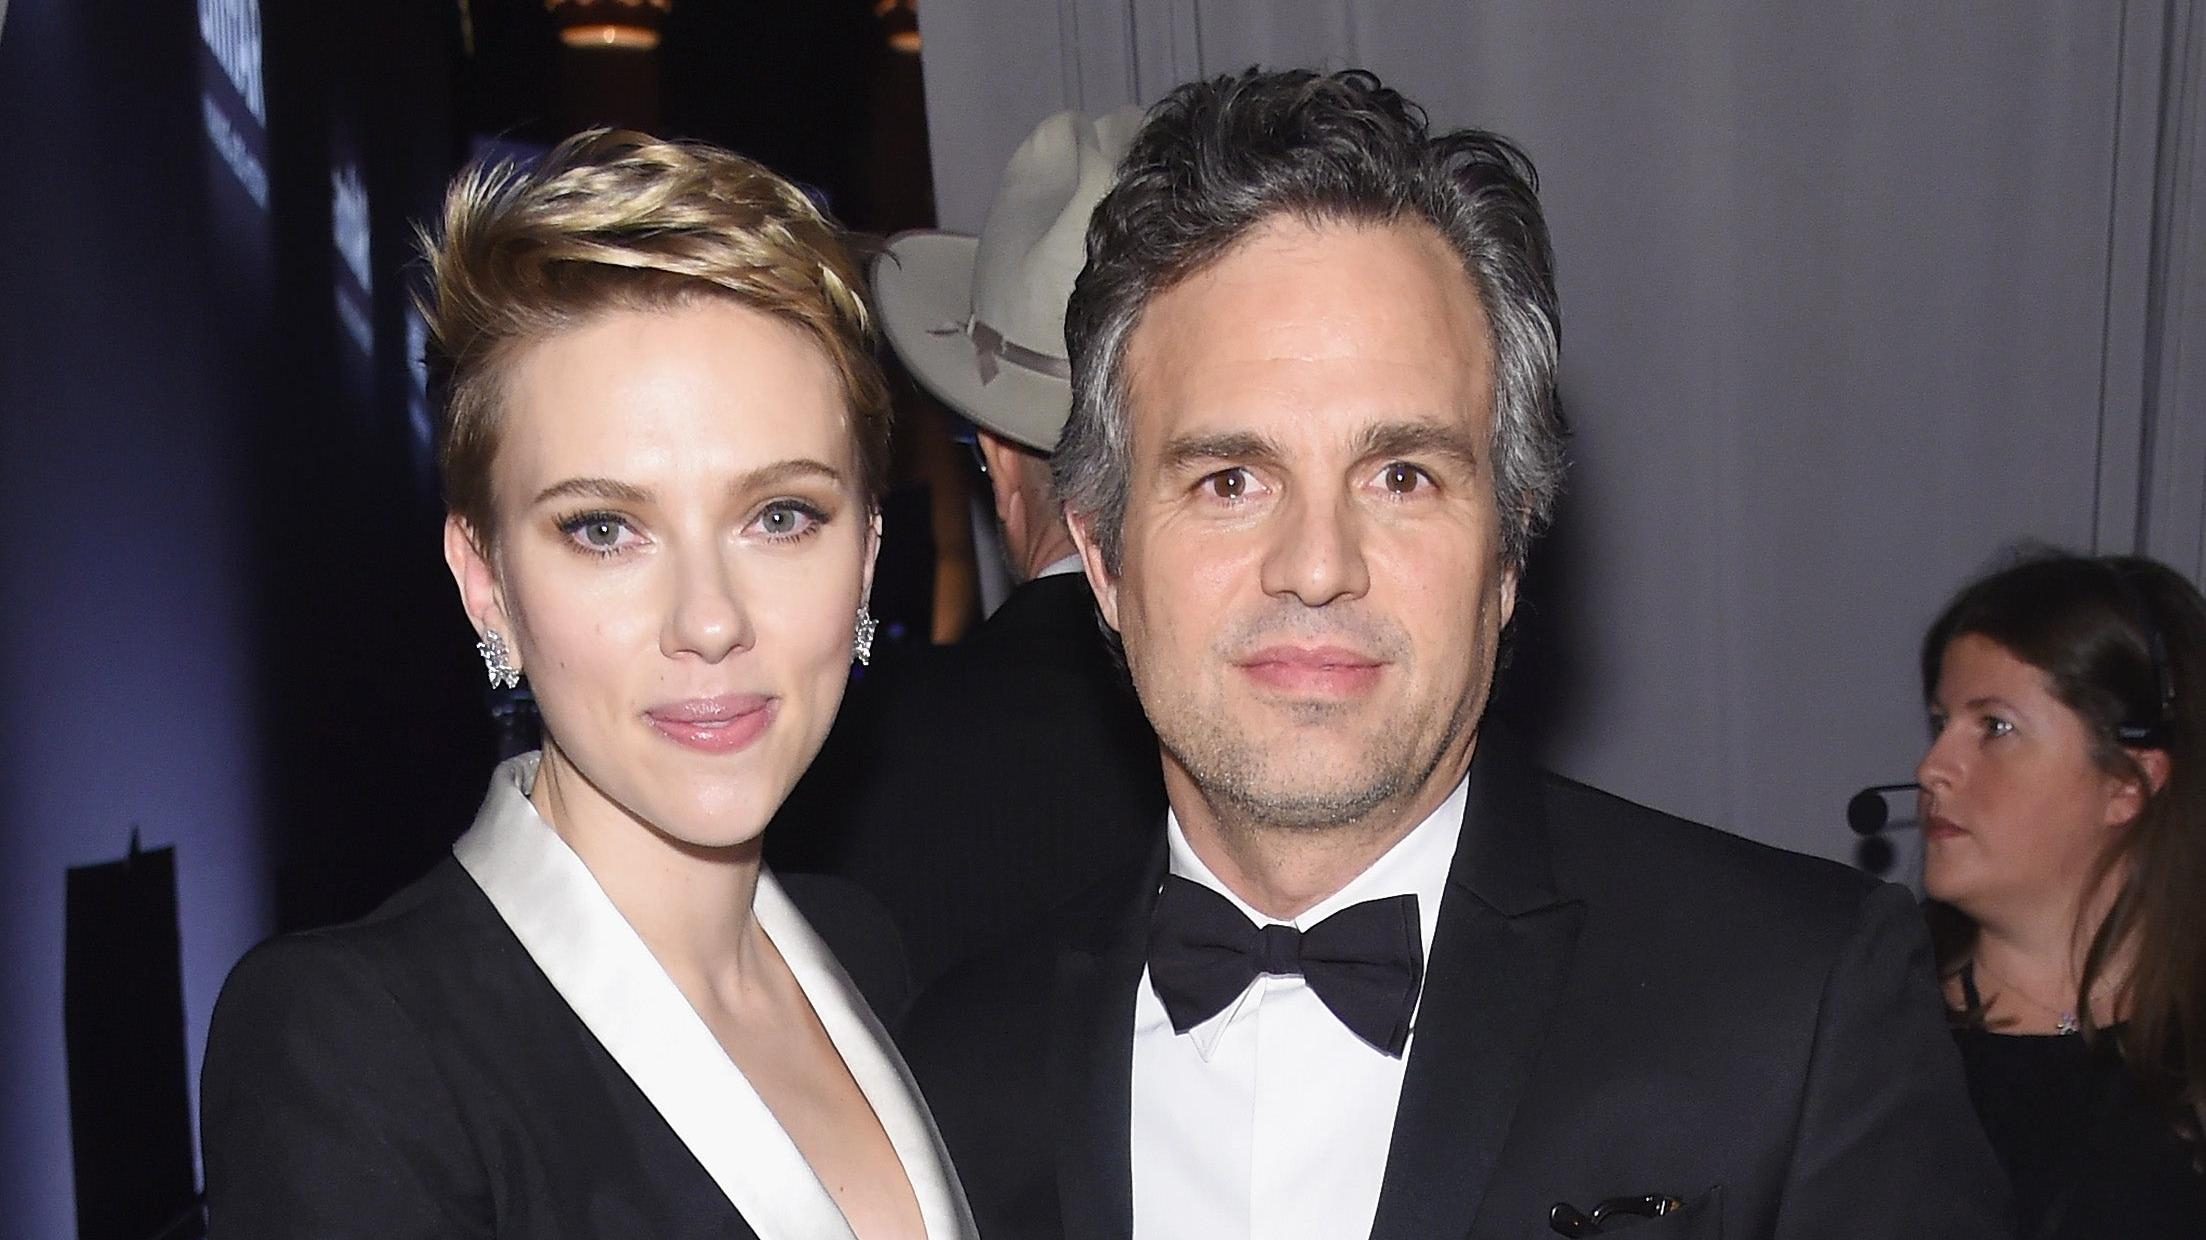 Scarlett Johansson, Mark Ruffalo join voices blasting the Golden Globes over diversity issues